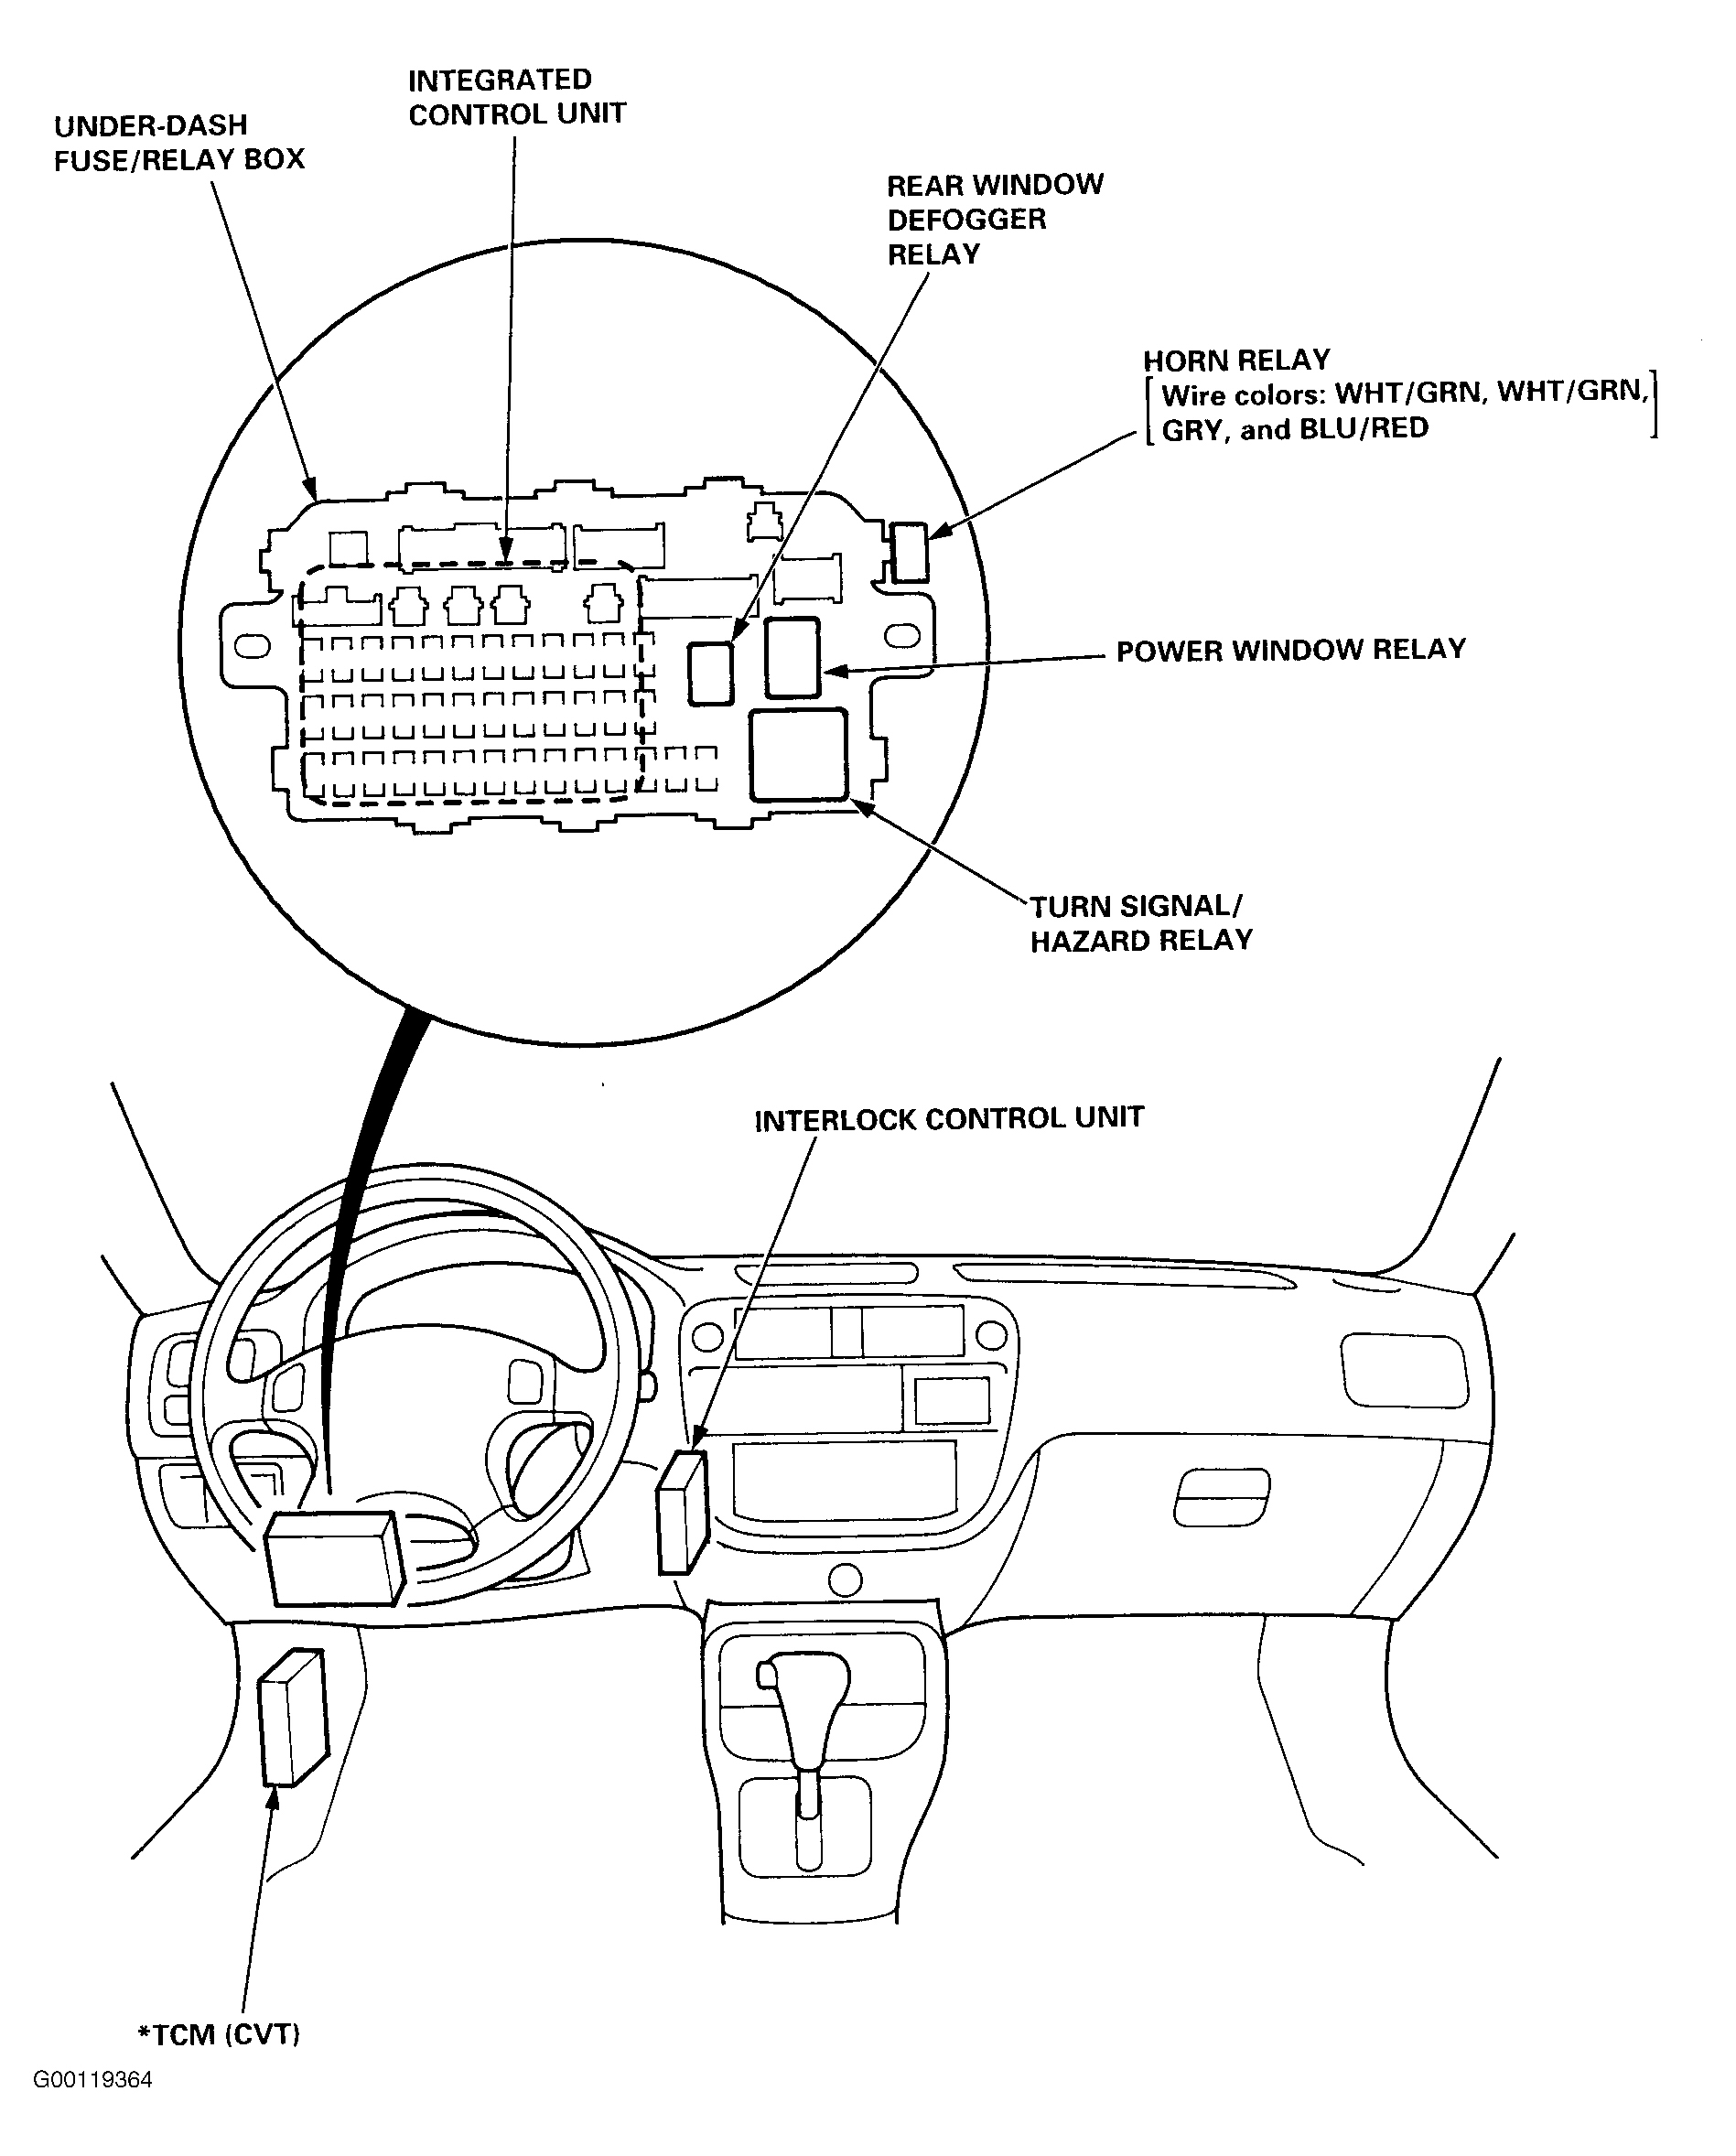 Honda Civic Si 2000 - Component Locations -  Locating Under-Dash Fuse/Relay Box (1996-97)